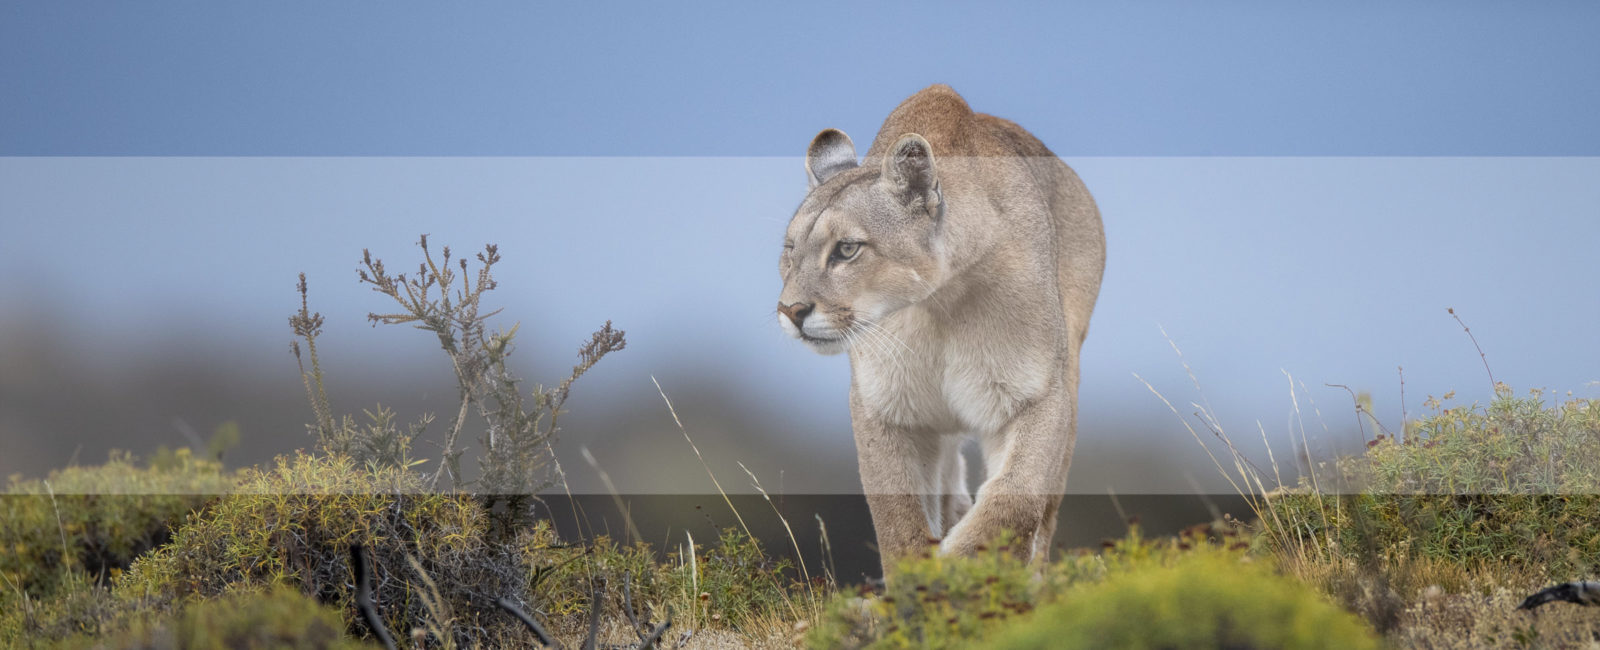 FiveZero Safaris, safari, Chile, puma, mountain lion